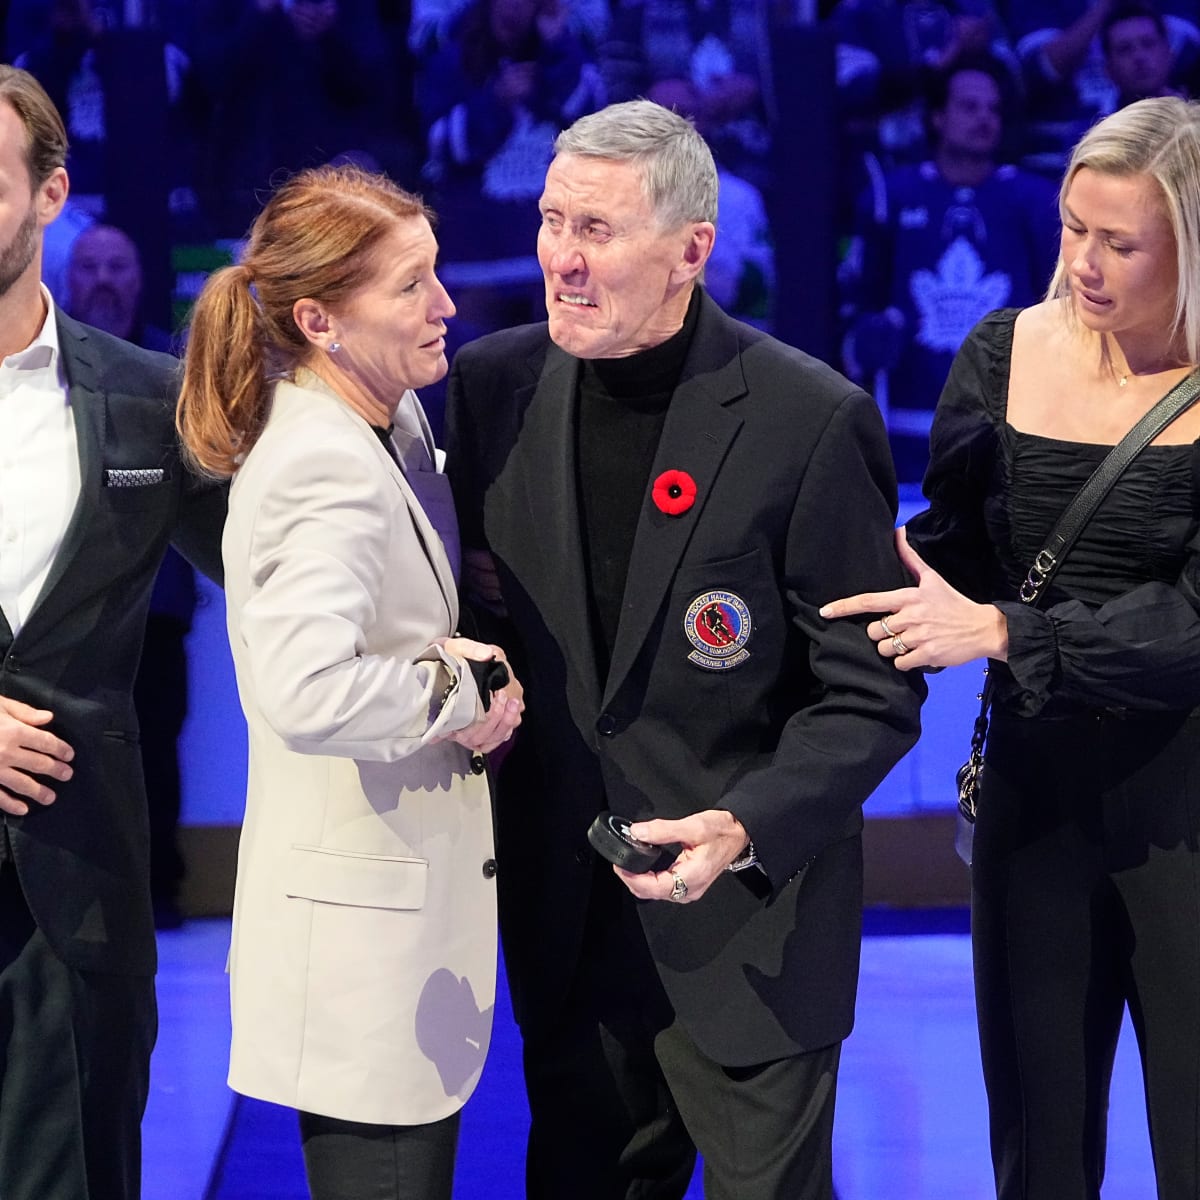 Leafs' Borje Salming remembered as 'pioneer,' 'legend